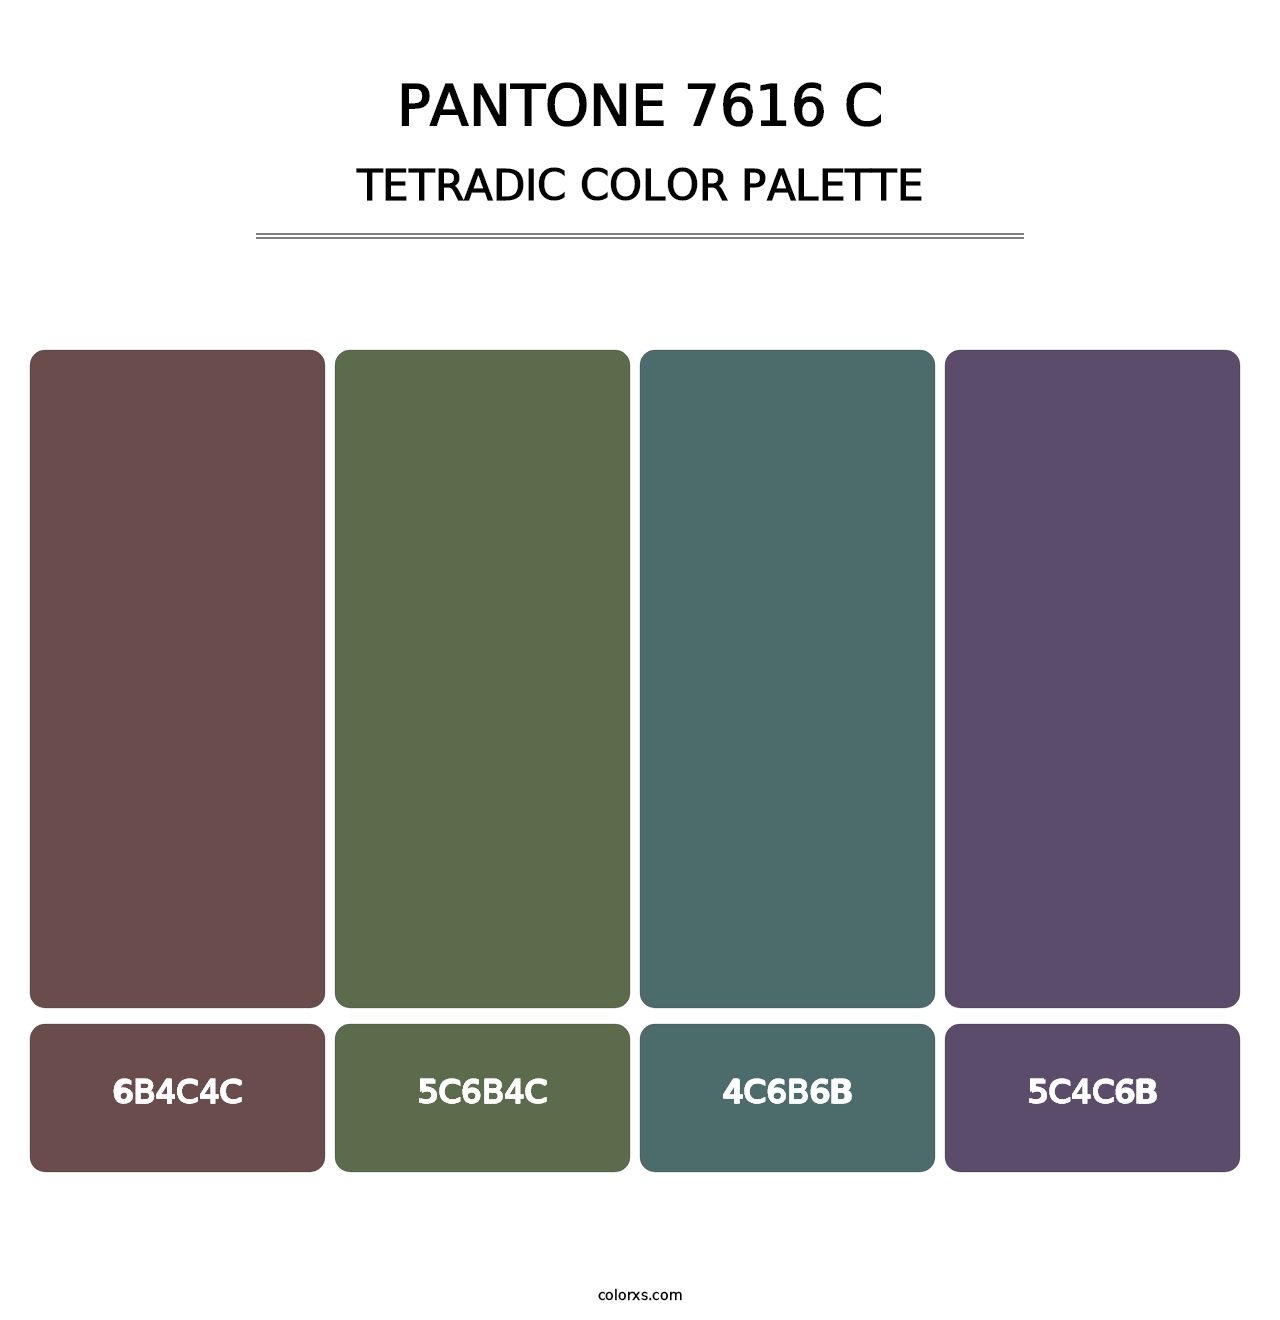 PANTONE 7616 C - Tetradic Color Palette